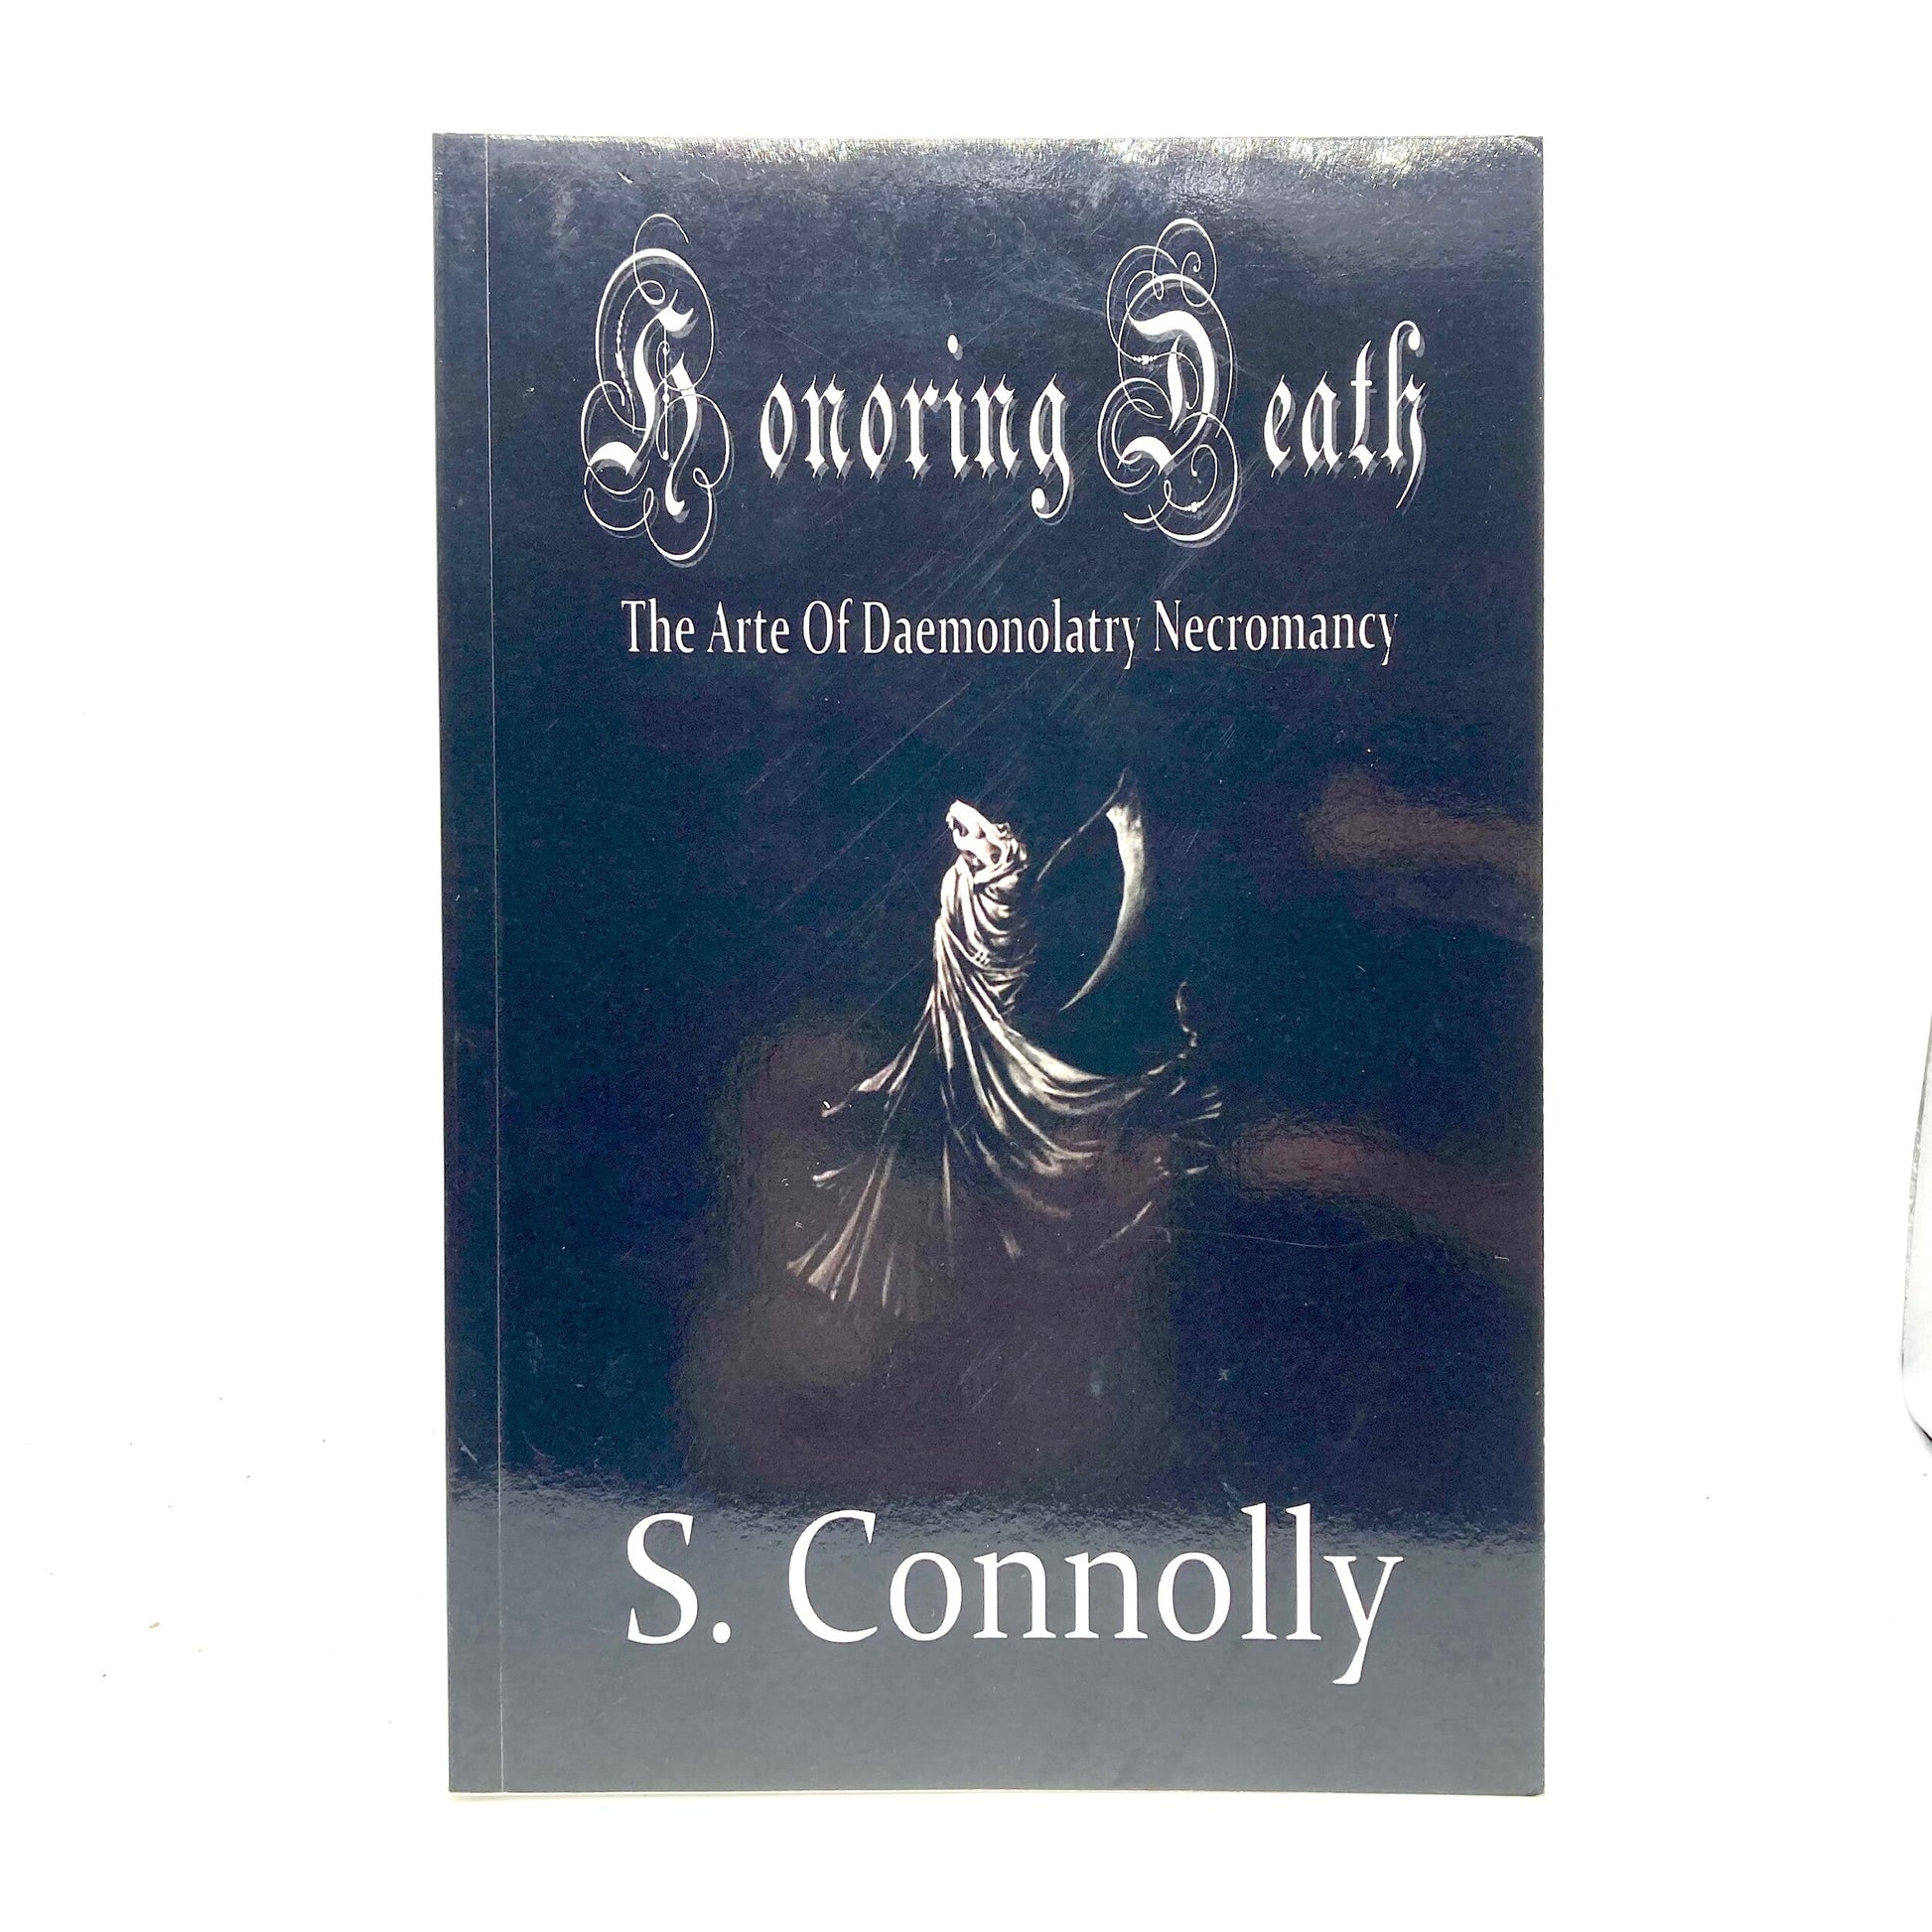 CONNOLLY, S. "Honoring Death: The Arte of Daemonolatry Necromancy" [D.B. Publishing, 2011] - Buzz Bookstore